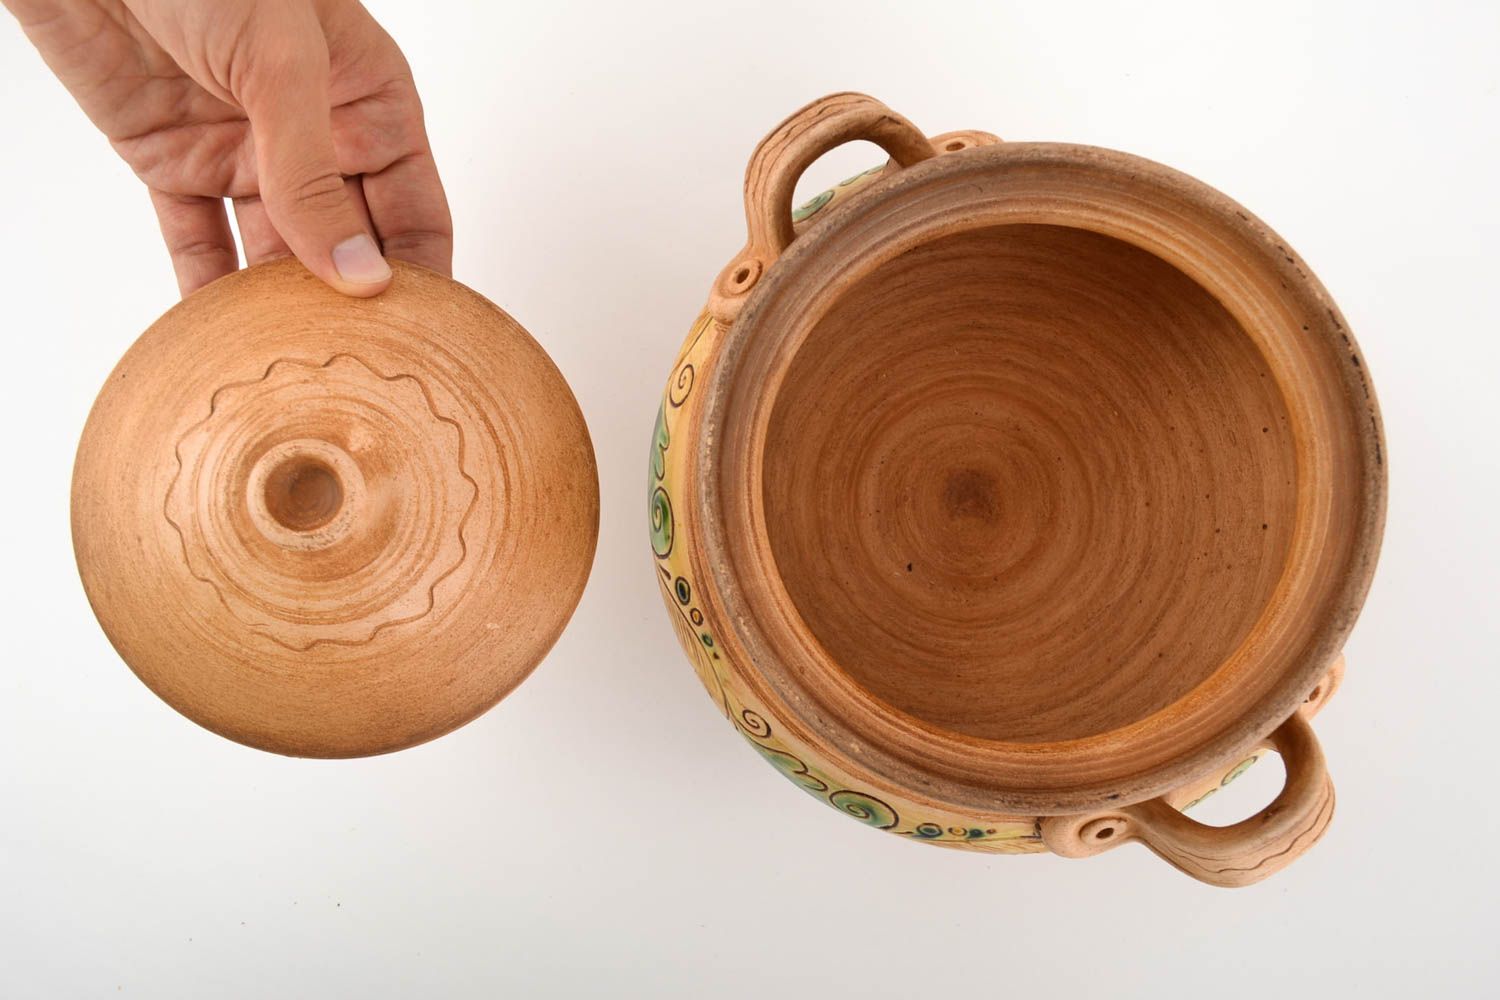 Keramik Geschirr handmade Ton Topf Küchen Geschirr Geschenk Idee bemalt schön foto 2